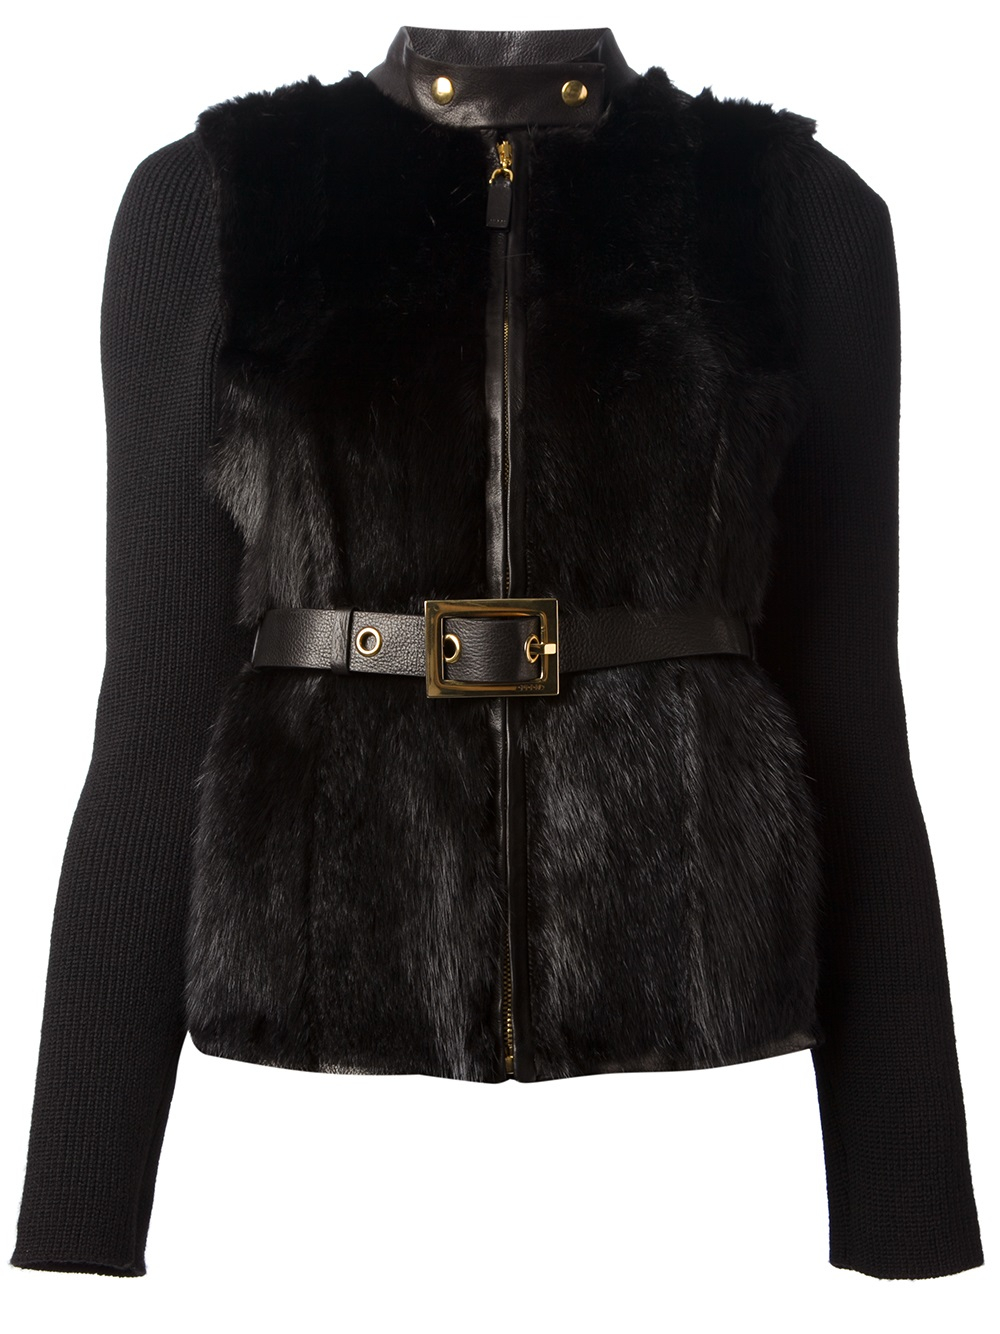 Gucci Fur Panel Jacket in Black - Lyst